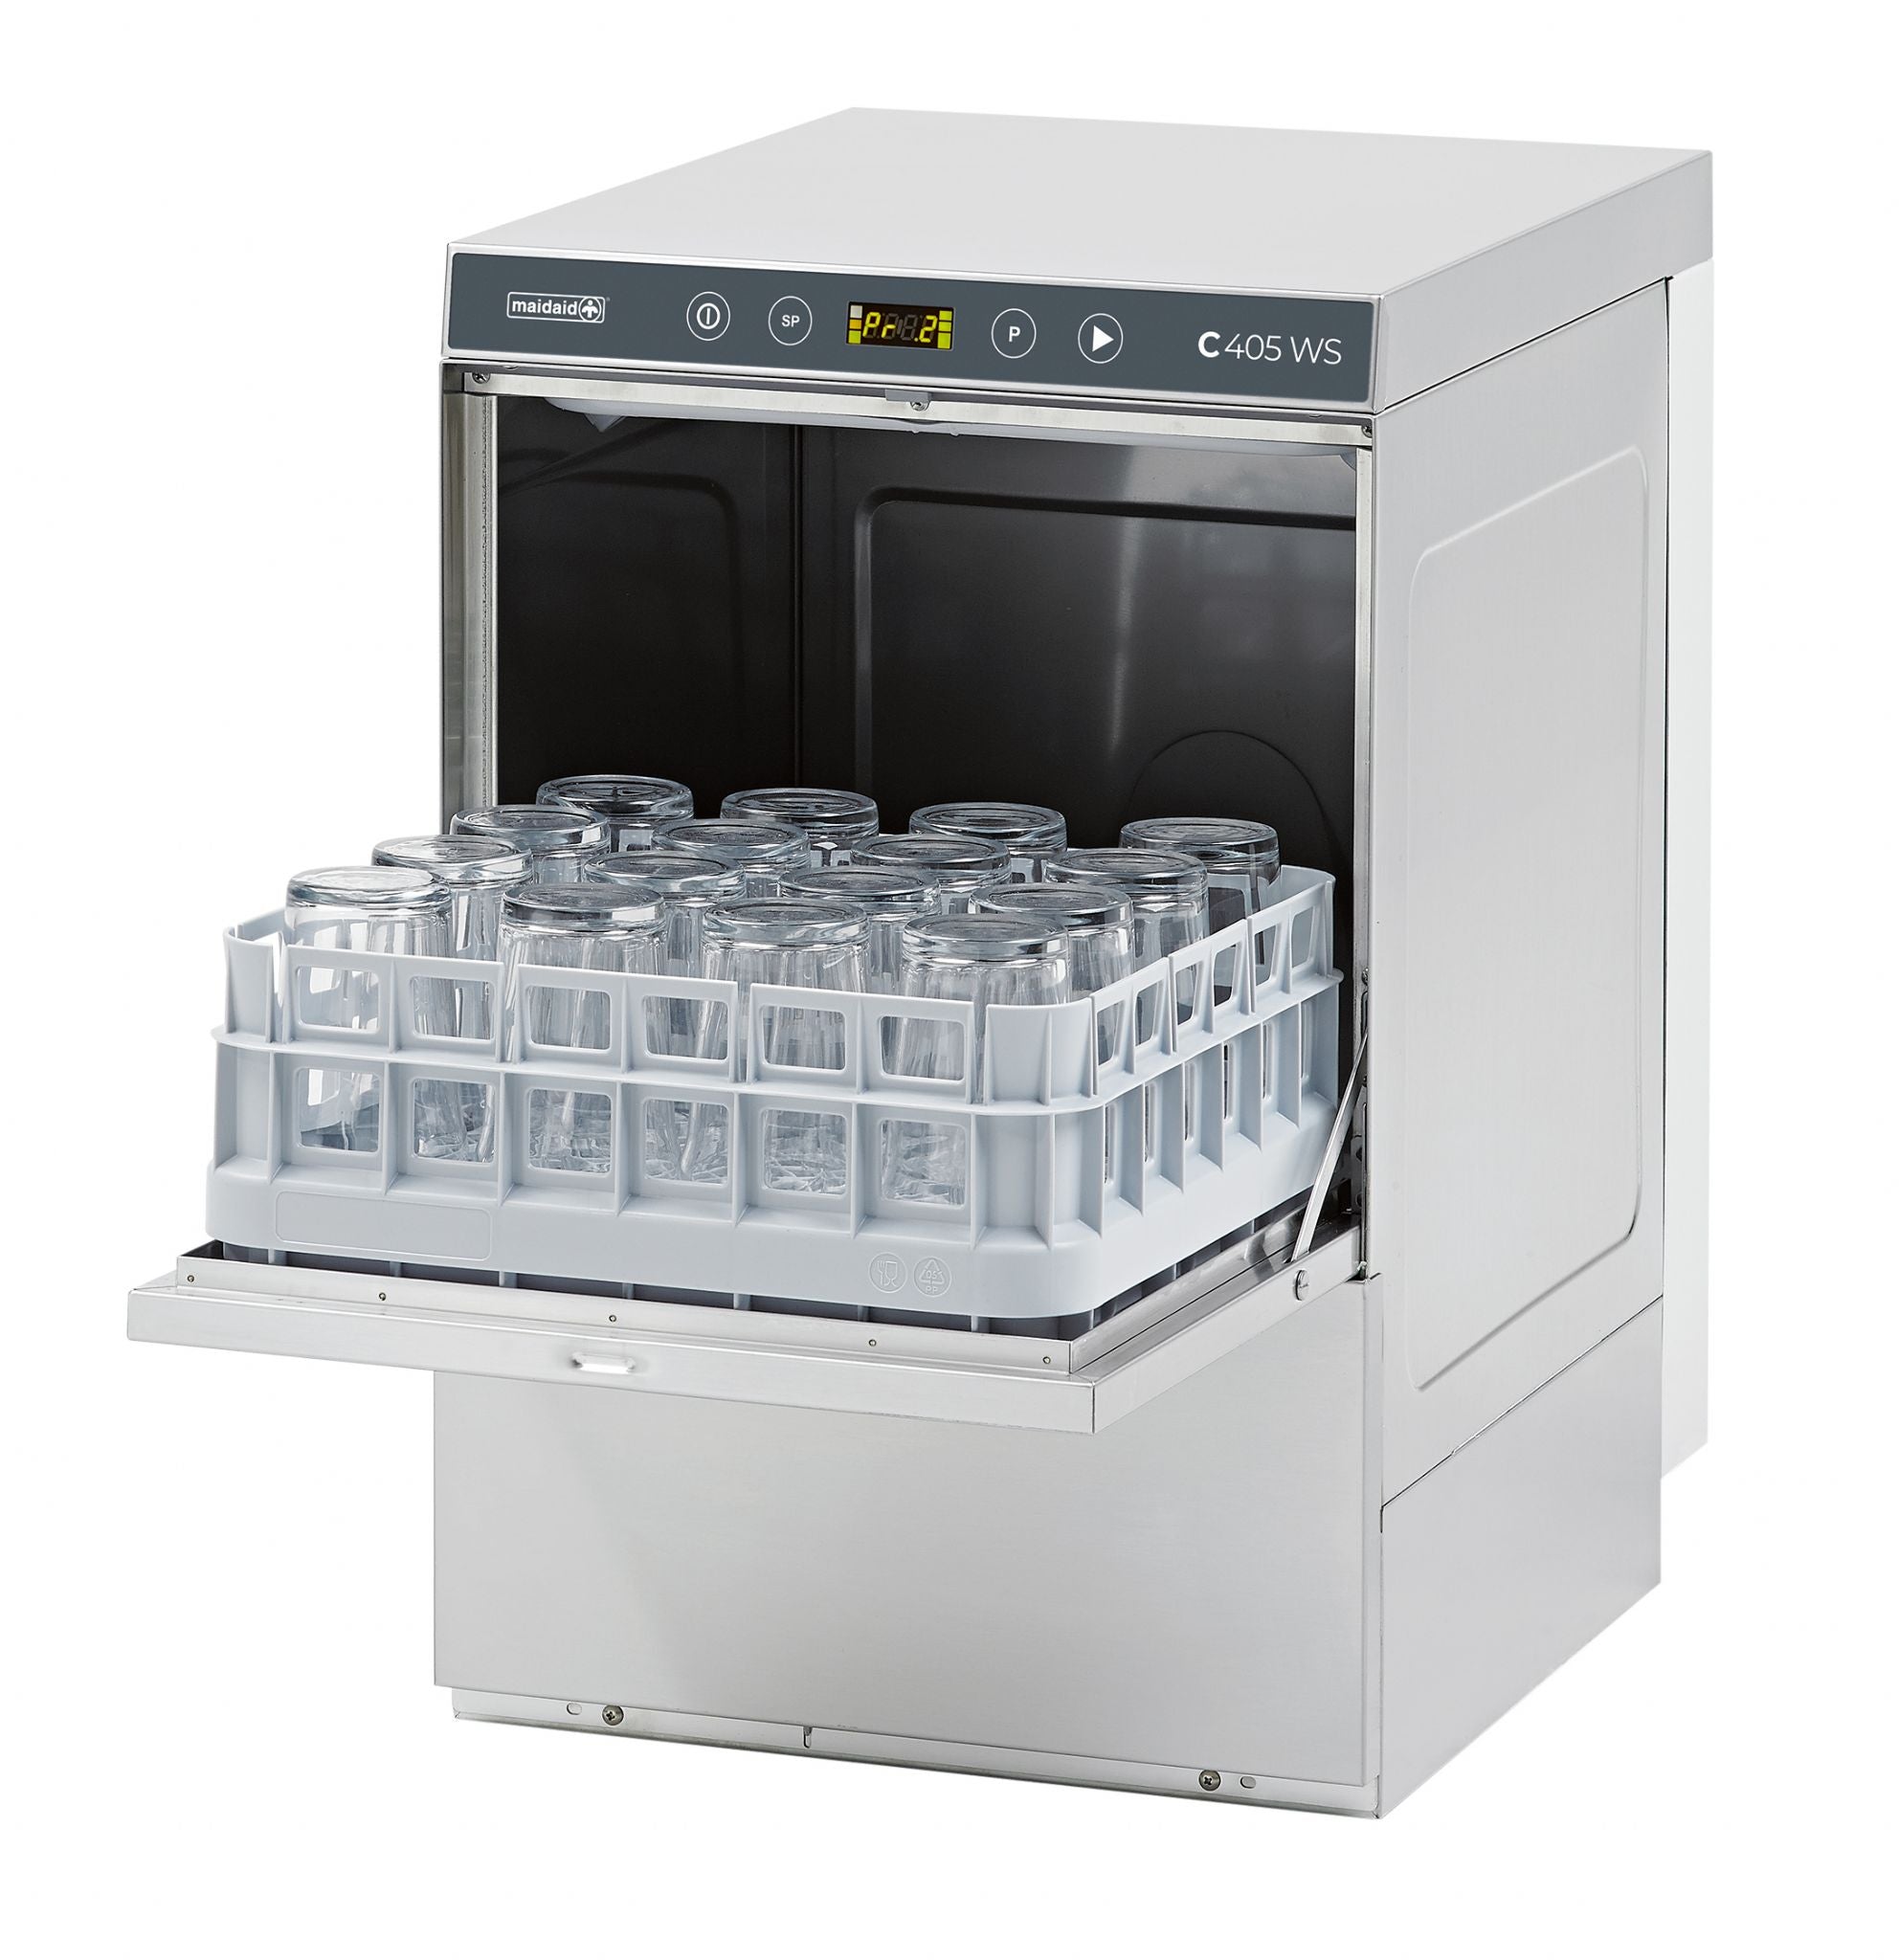 Maidaid C405WS Glasswasher JD Catering Equipment Solutions Ltd